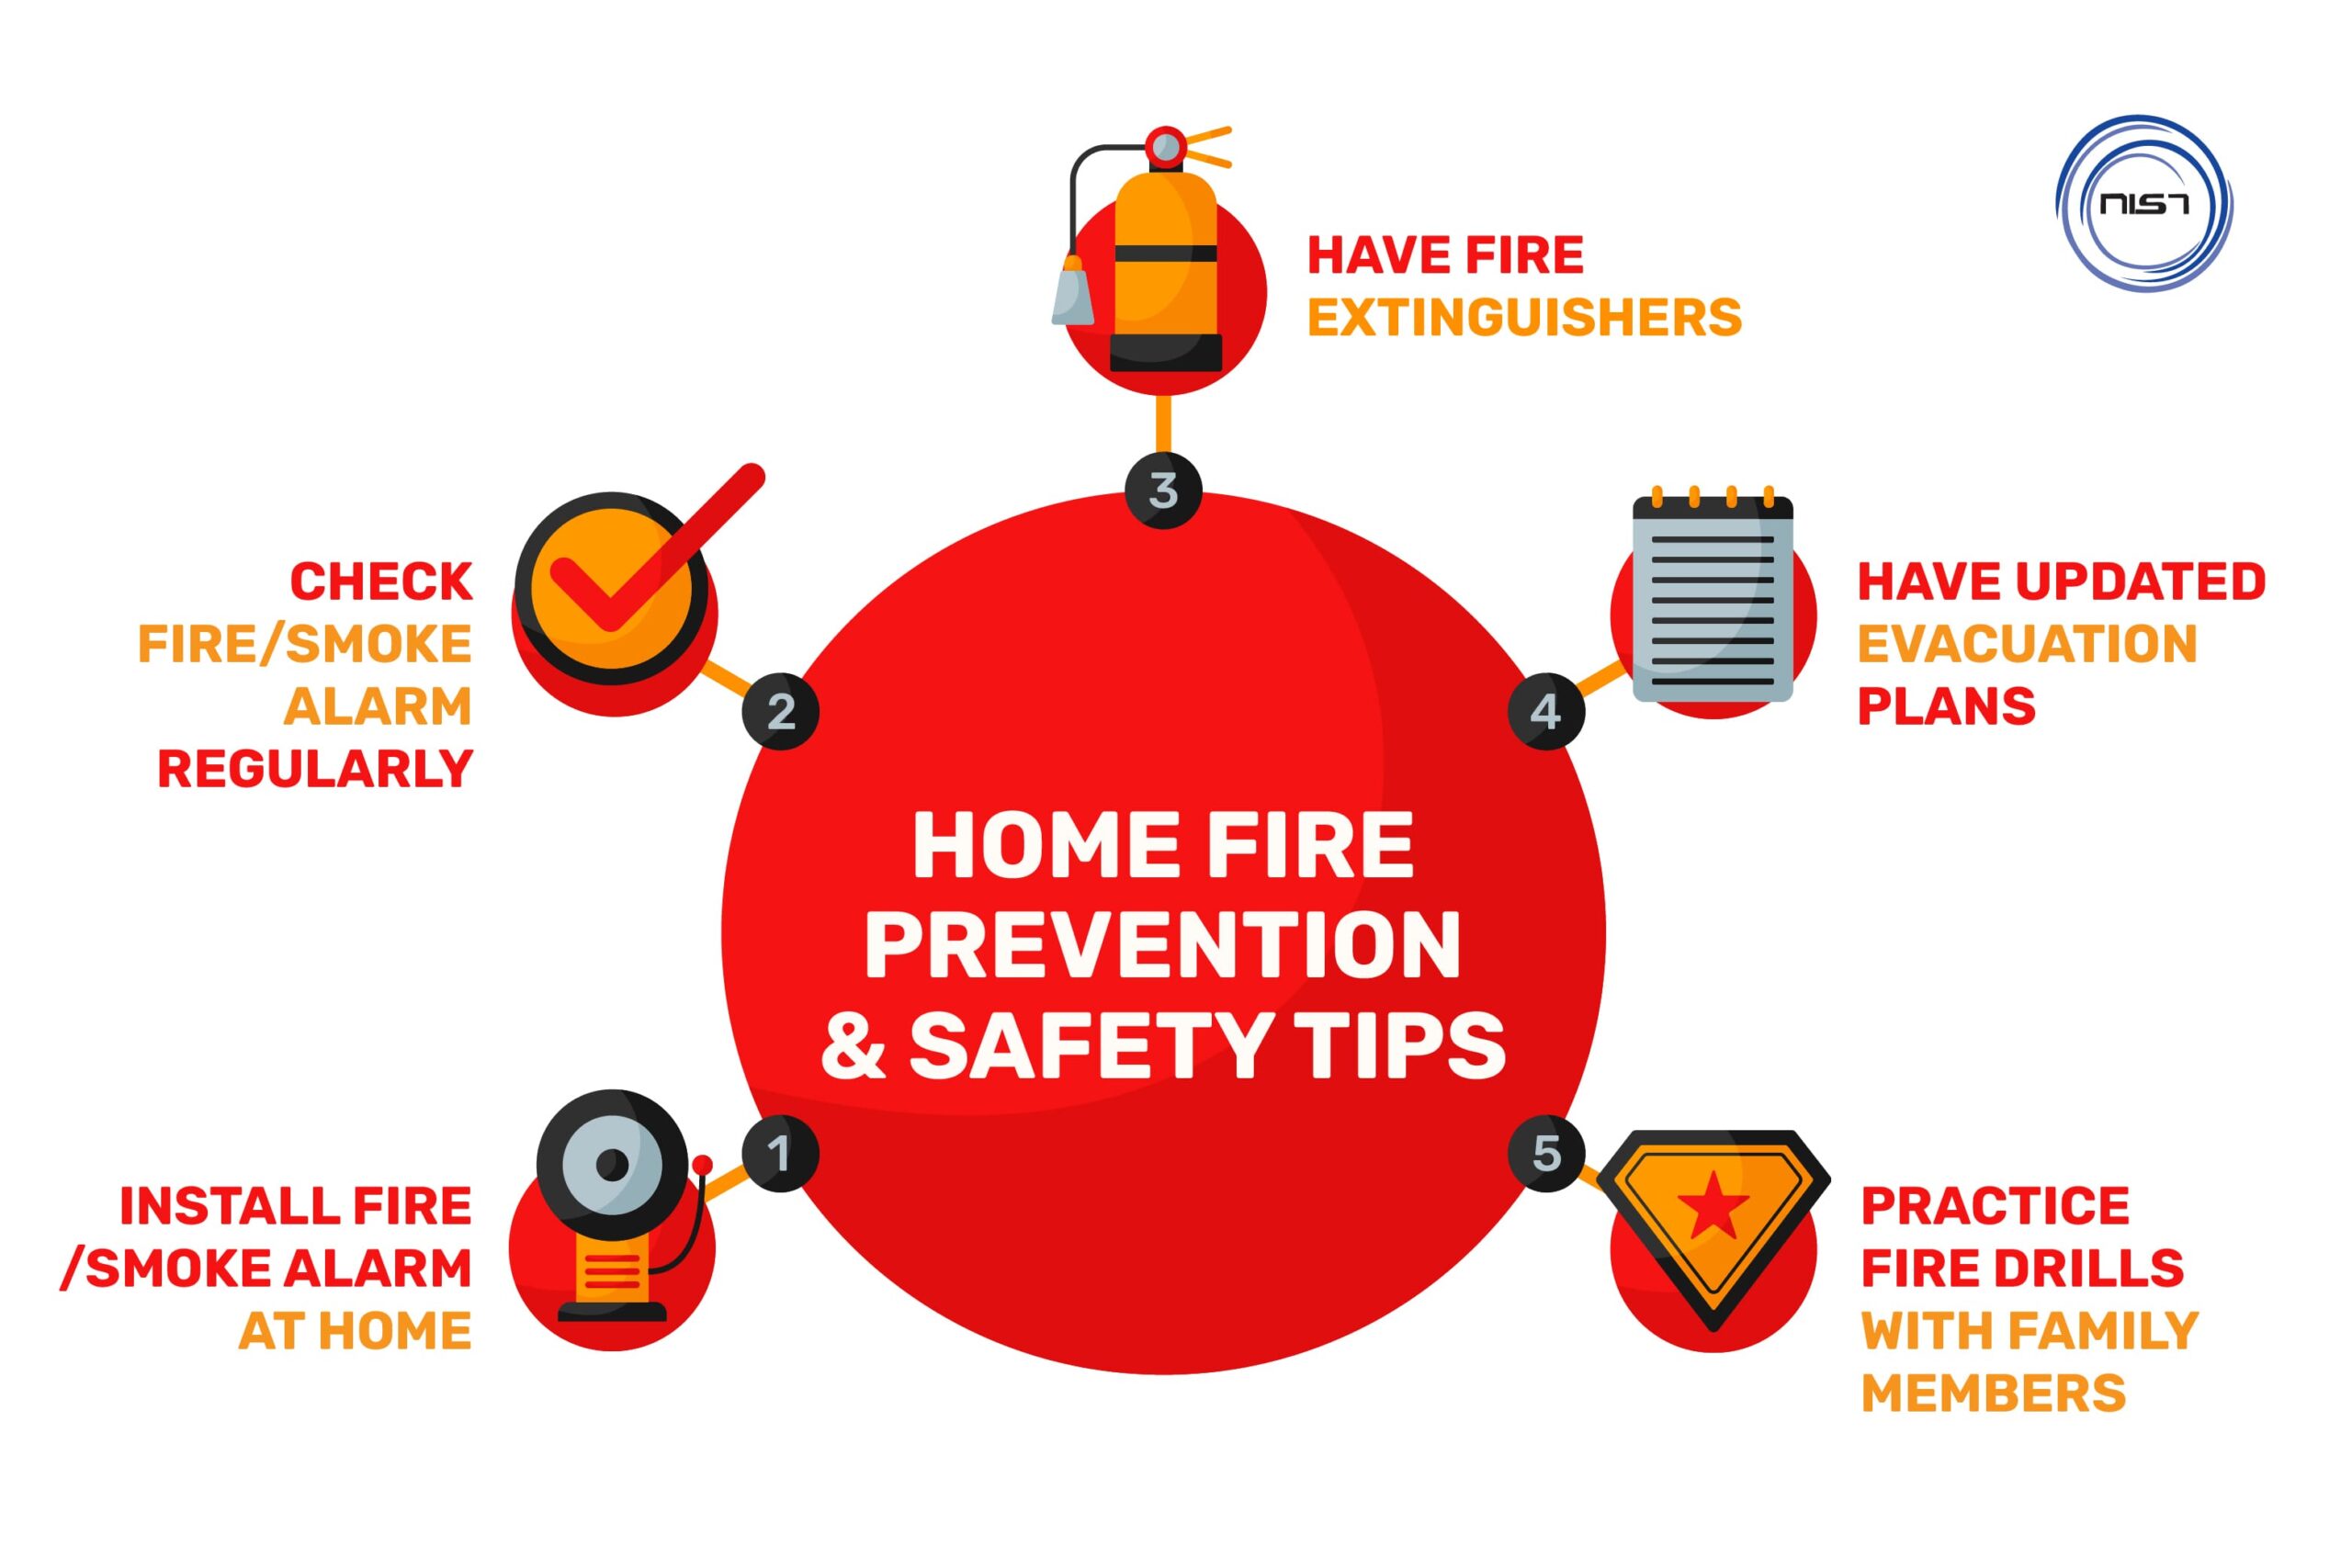 fire prevention